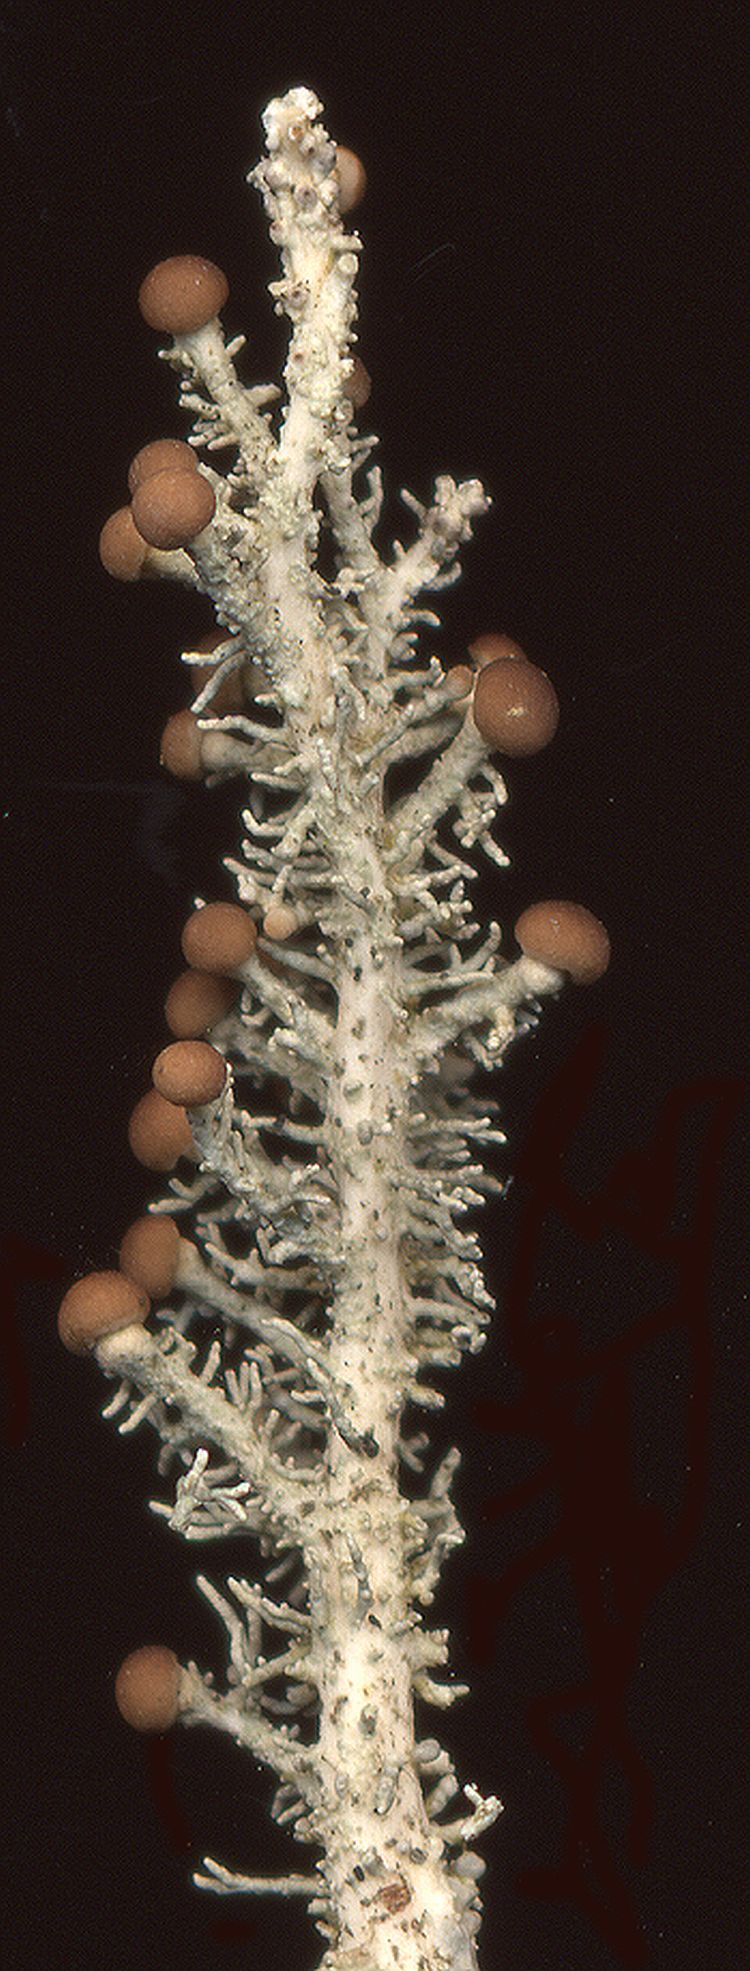 Stereocaulon massartianum from Taiwan leg. Sparrius 5852